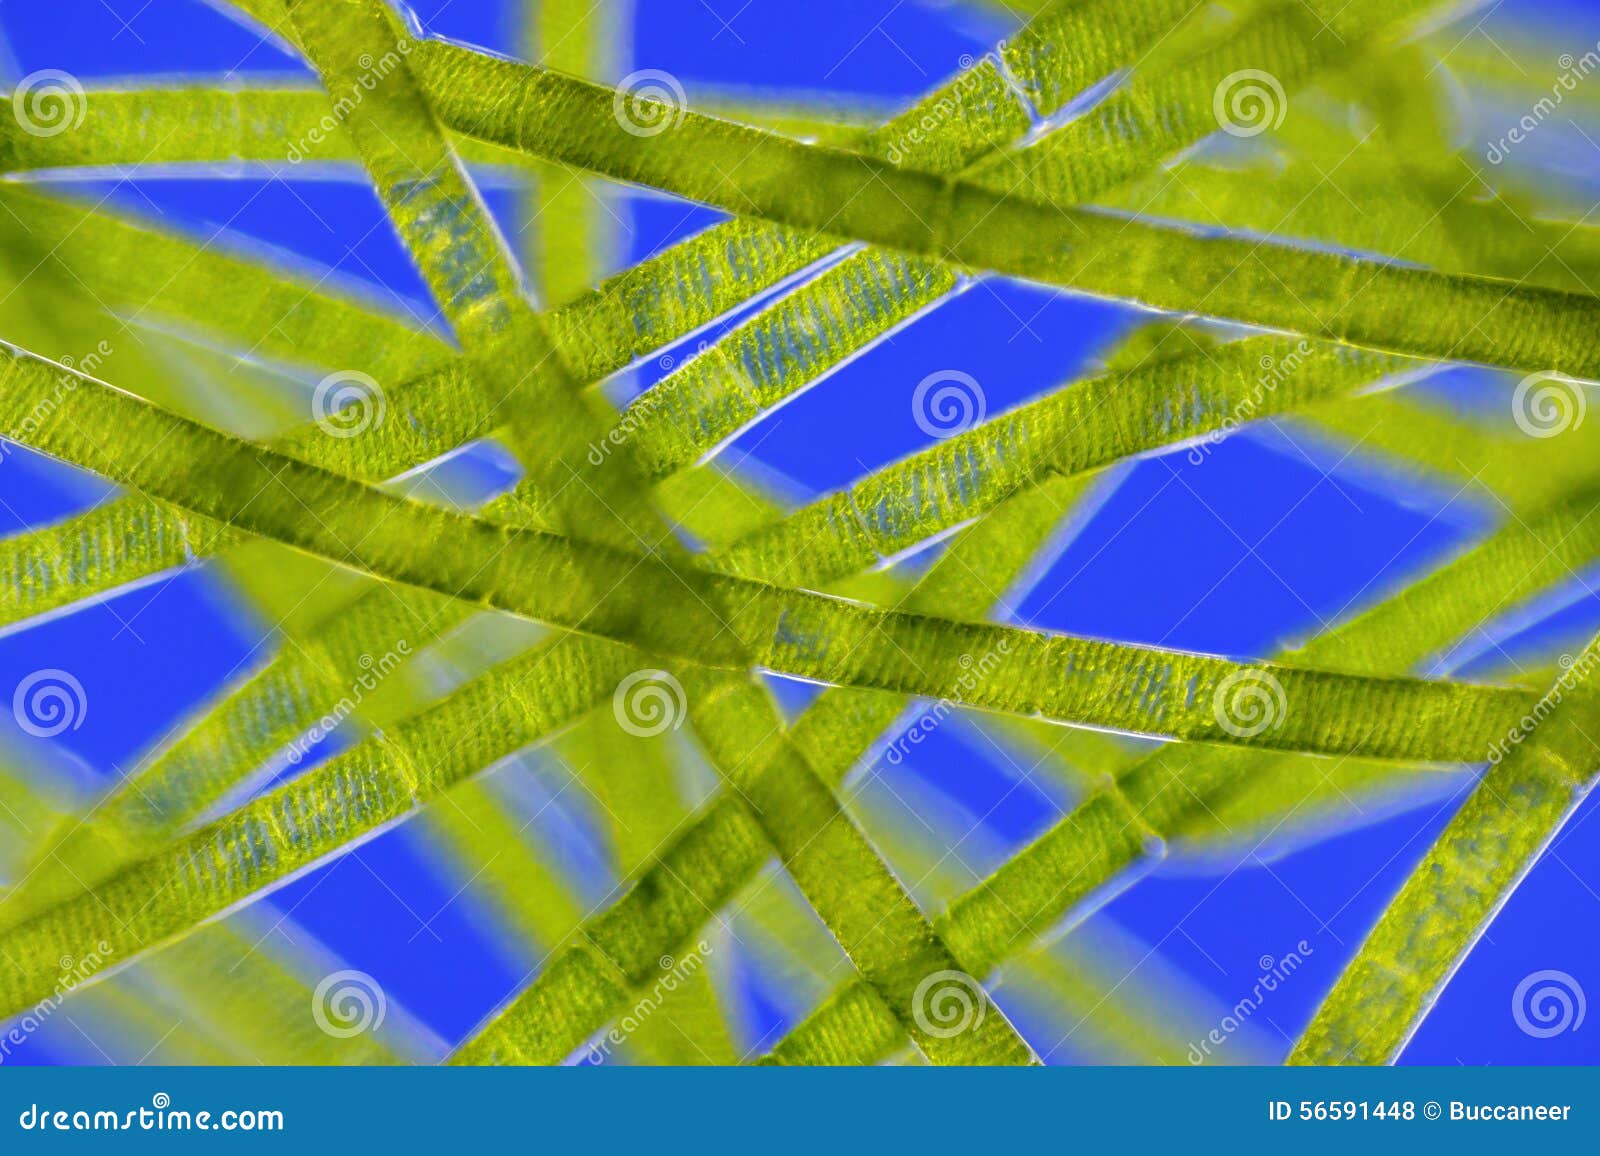 microscopic view of green algae (spirogyra)